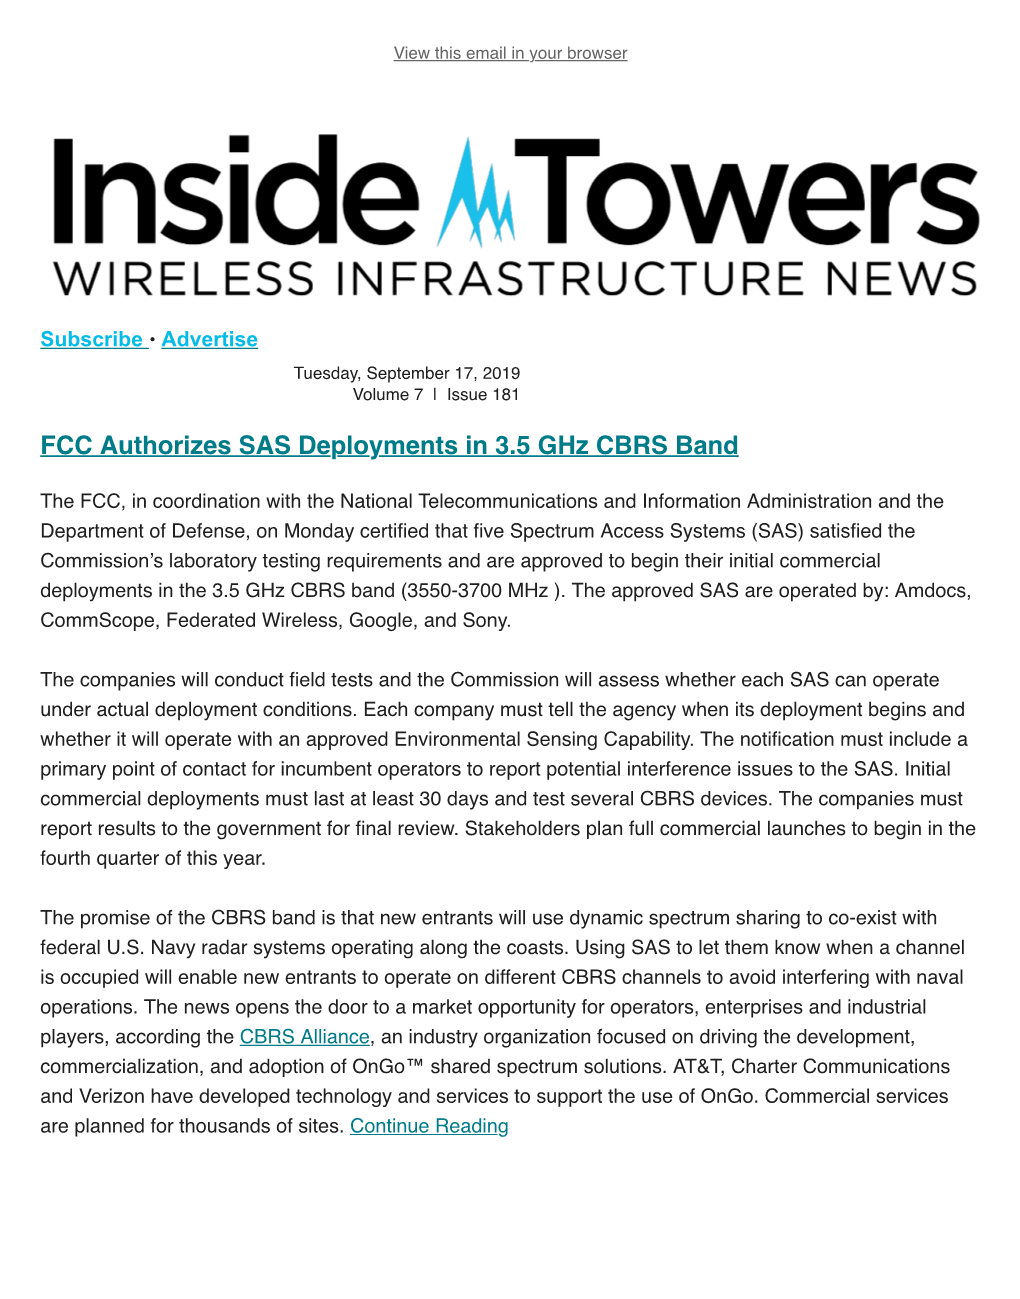 FCC Authorizes SAS Deployments in 3.5 Ghz CBRS Band